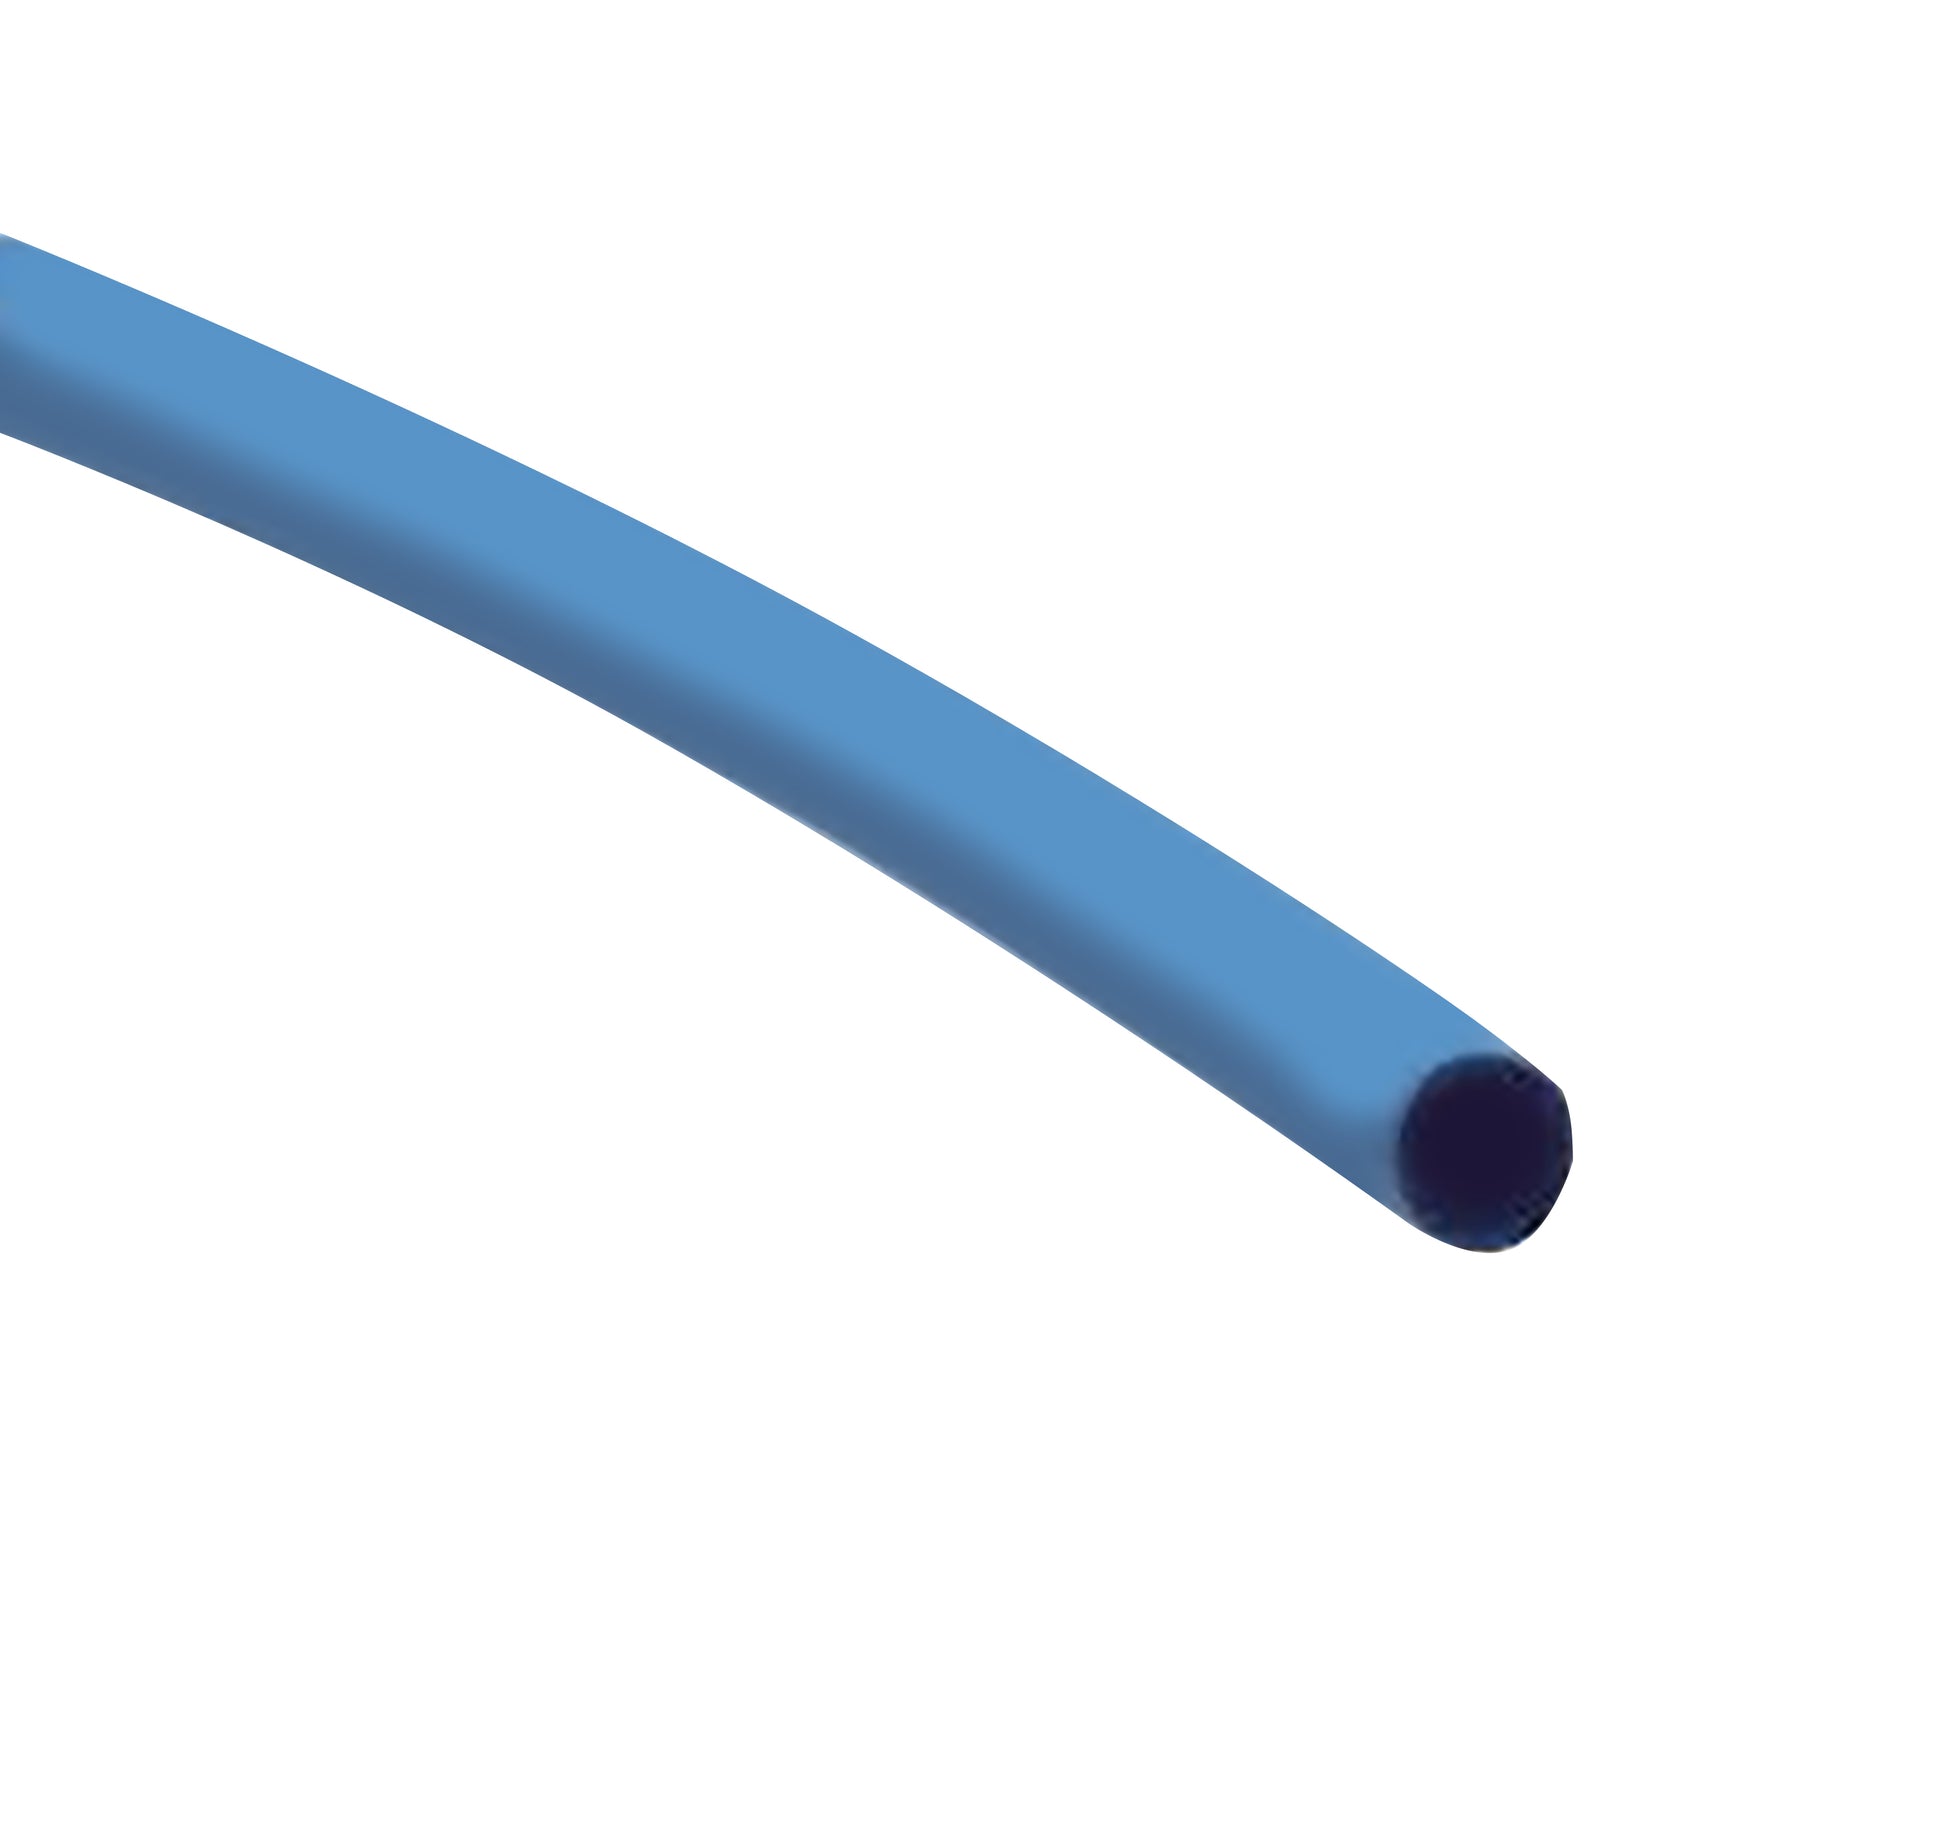 Flexible Thin Single Wall Non-Adhesive Heat Shrink Tubing 2:1 Blue 3/4" ID - 48" Inch 4 Pack